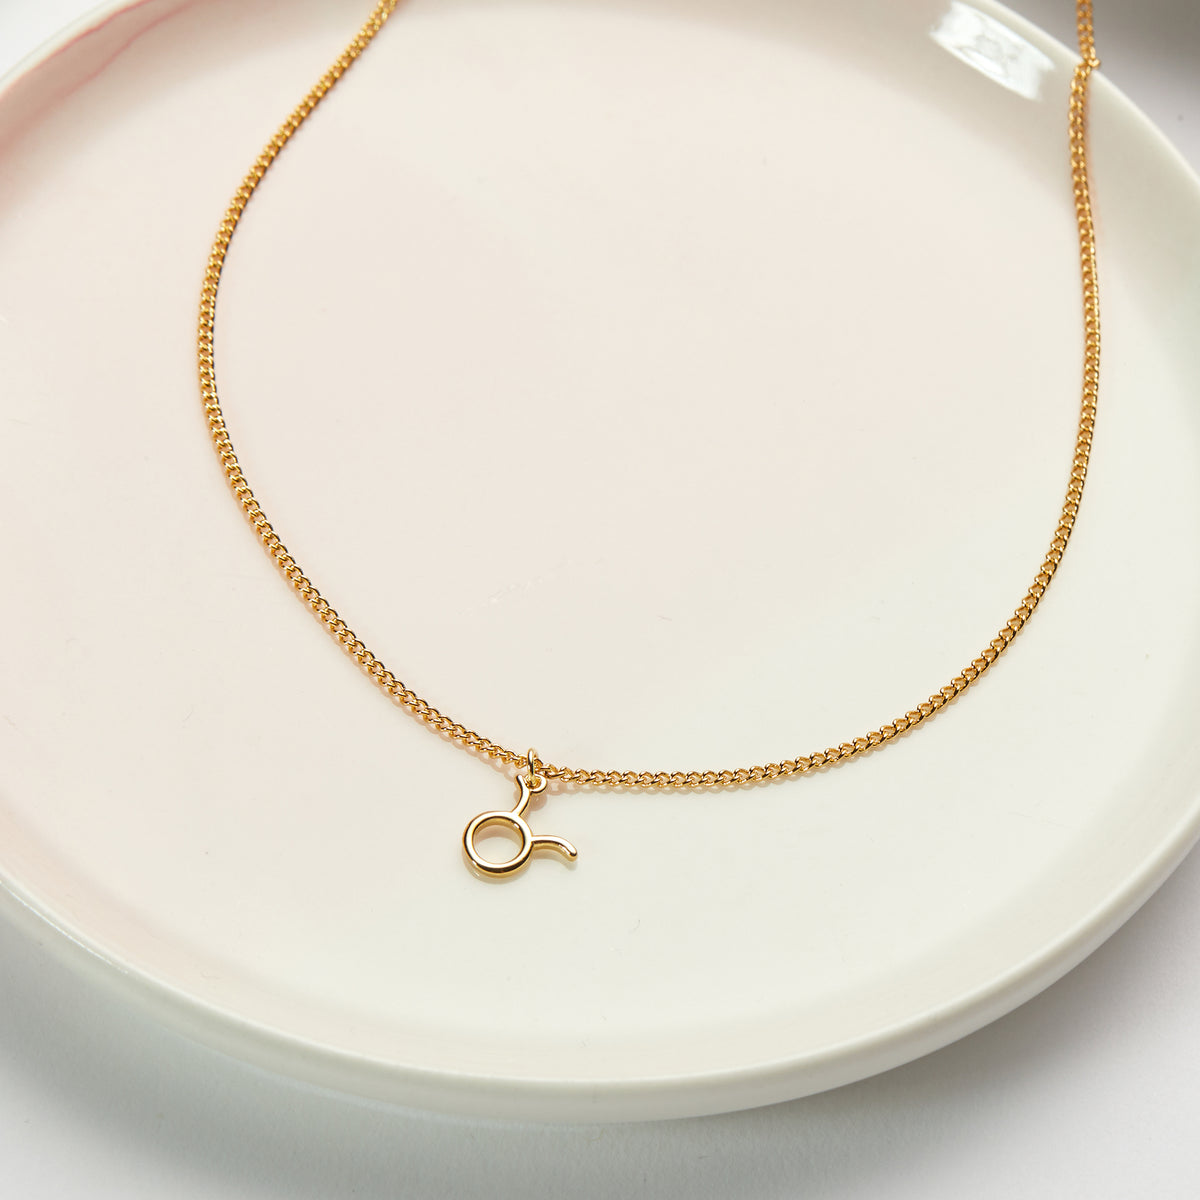 Taurus Zodiac Gift Necklace